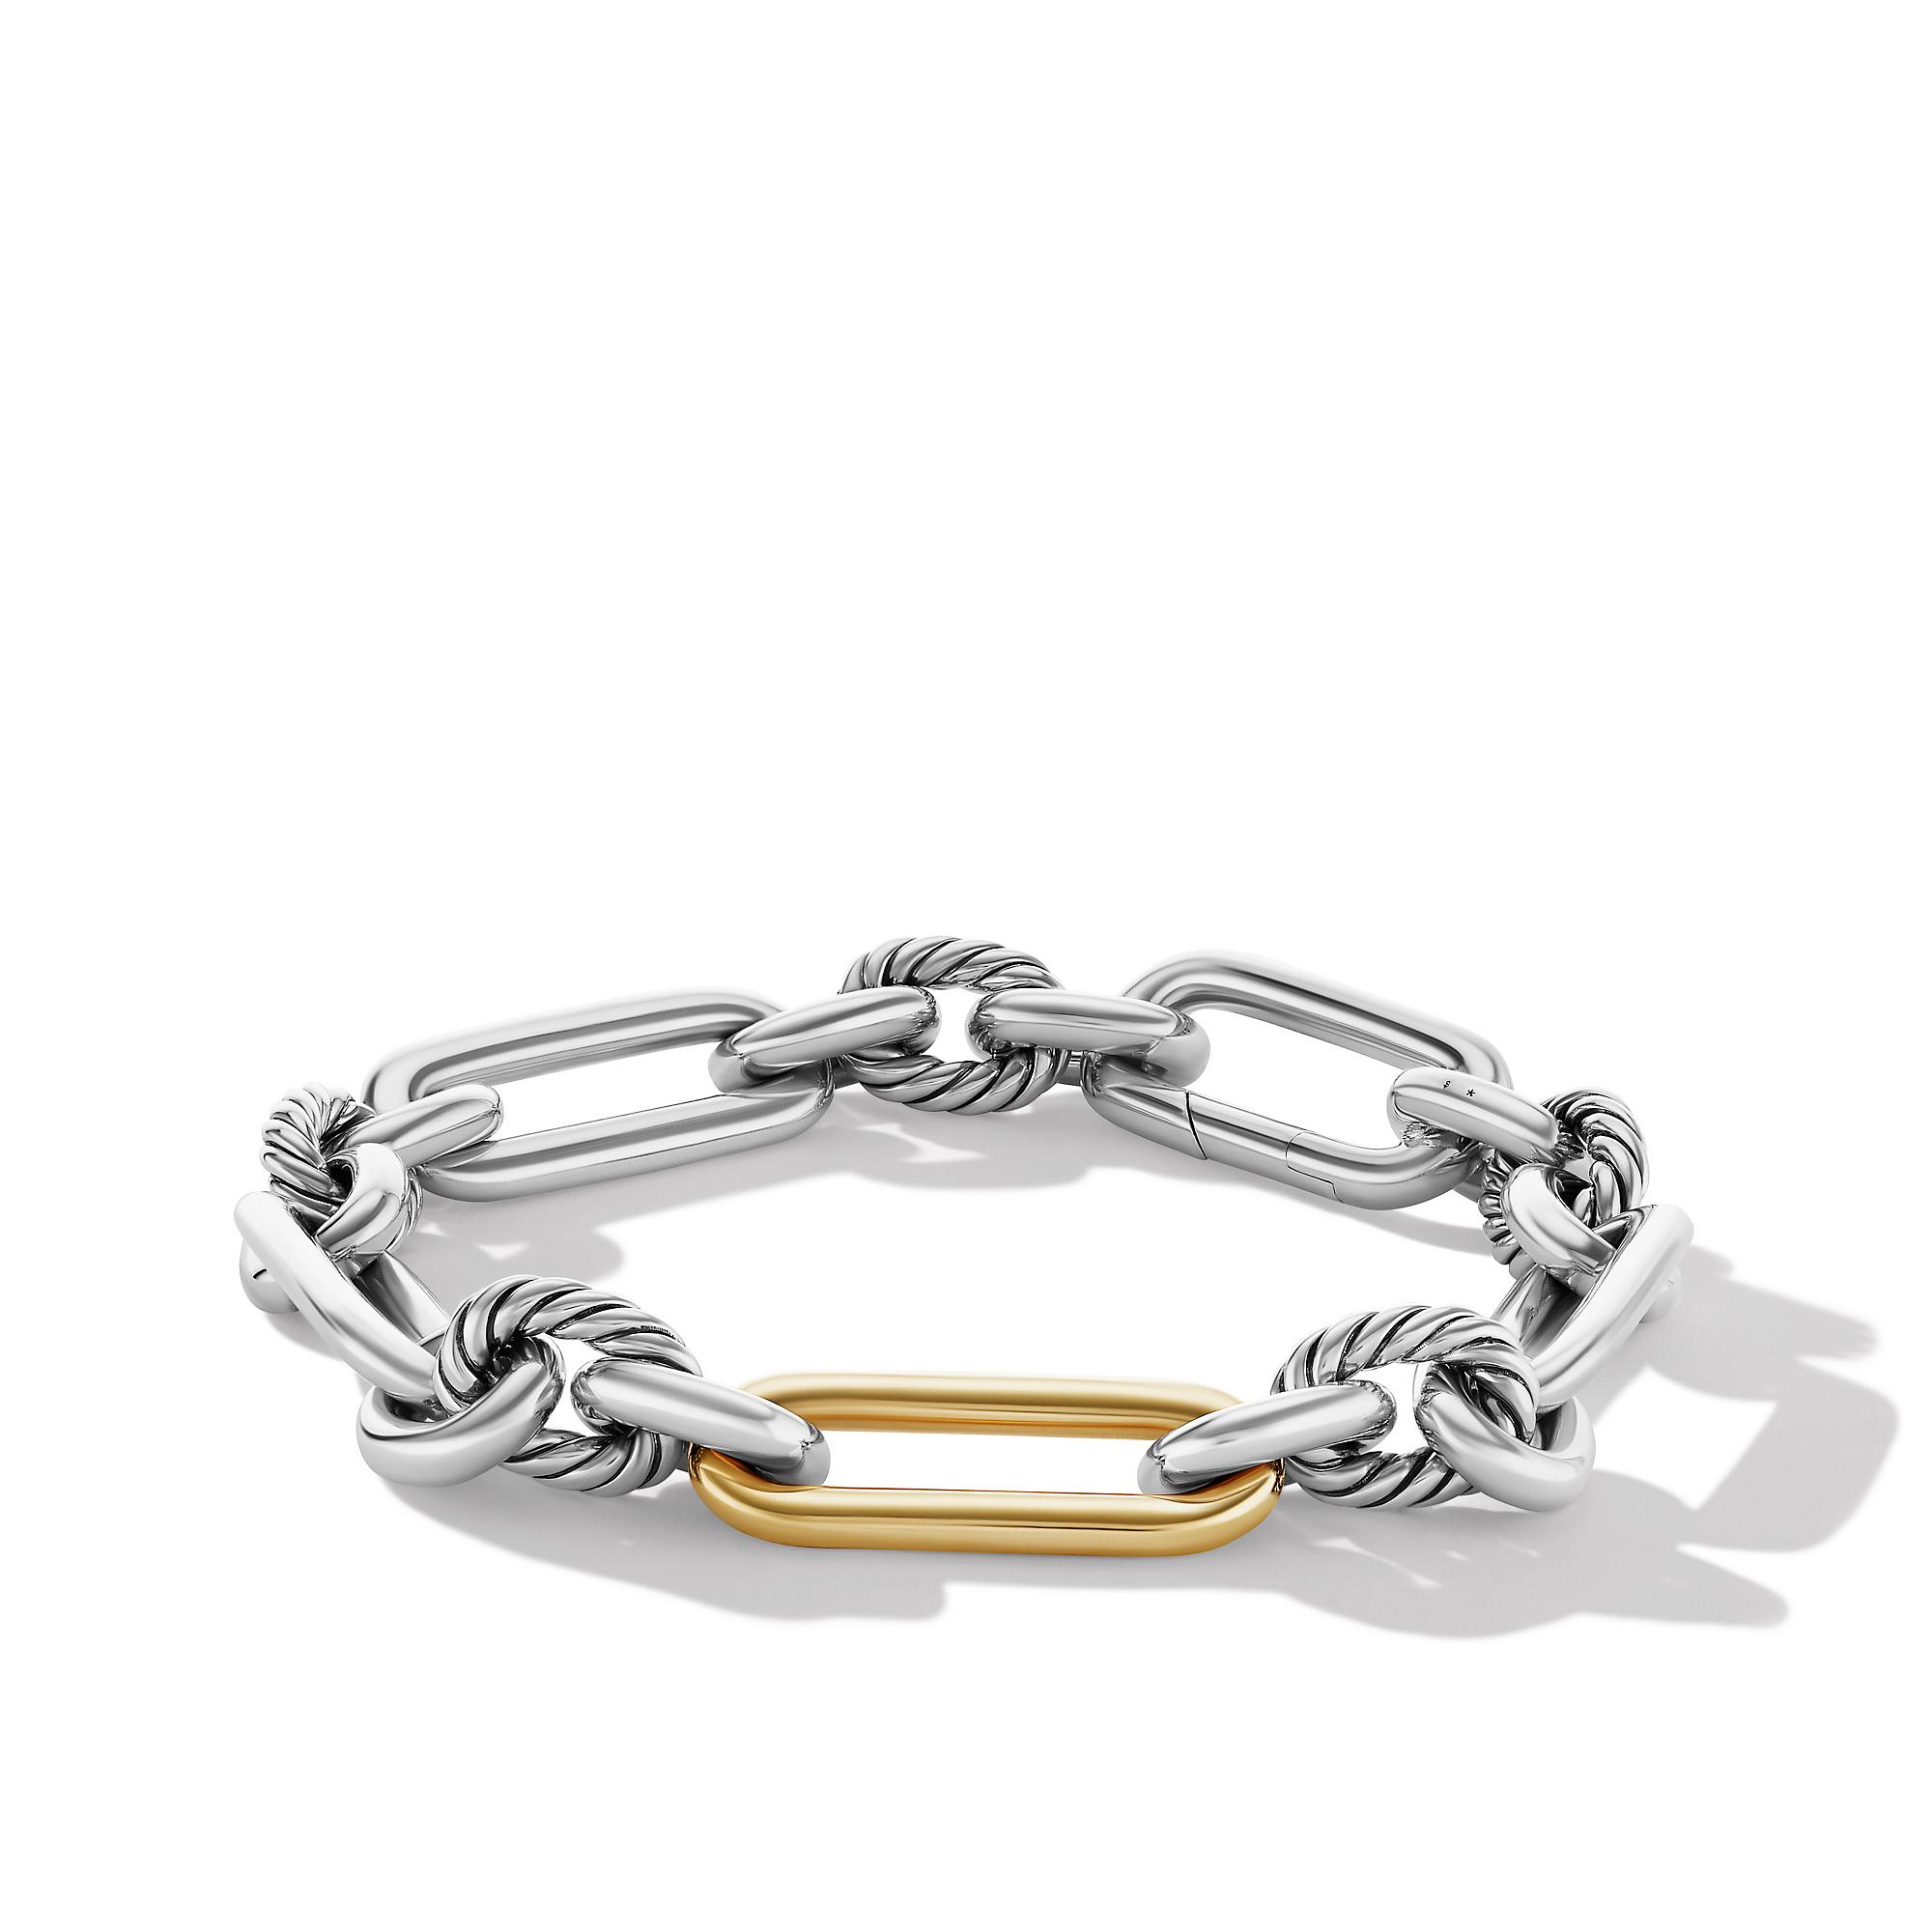 David Yurman Lexington Chain Bracelet with 18k Yellow Gold Link, size large